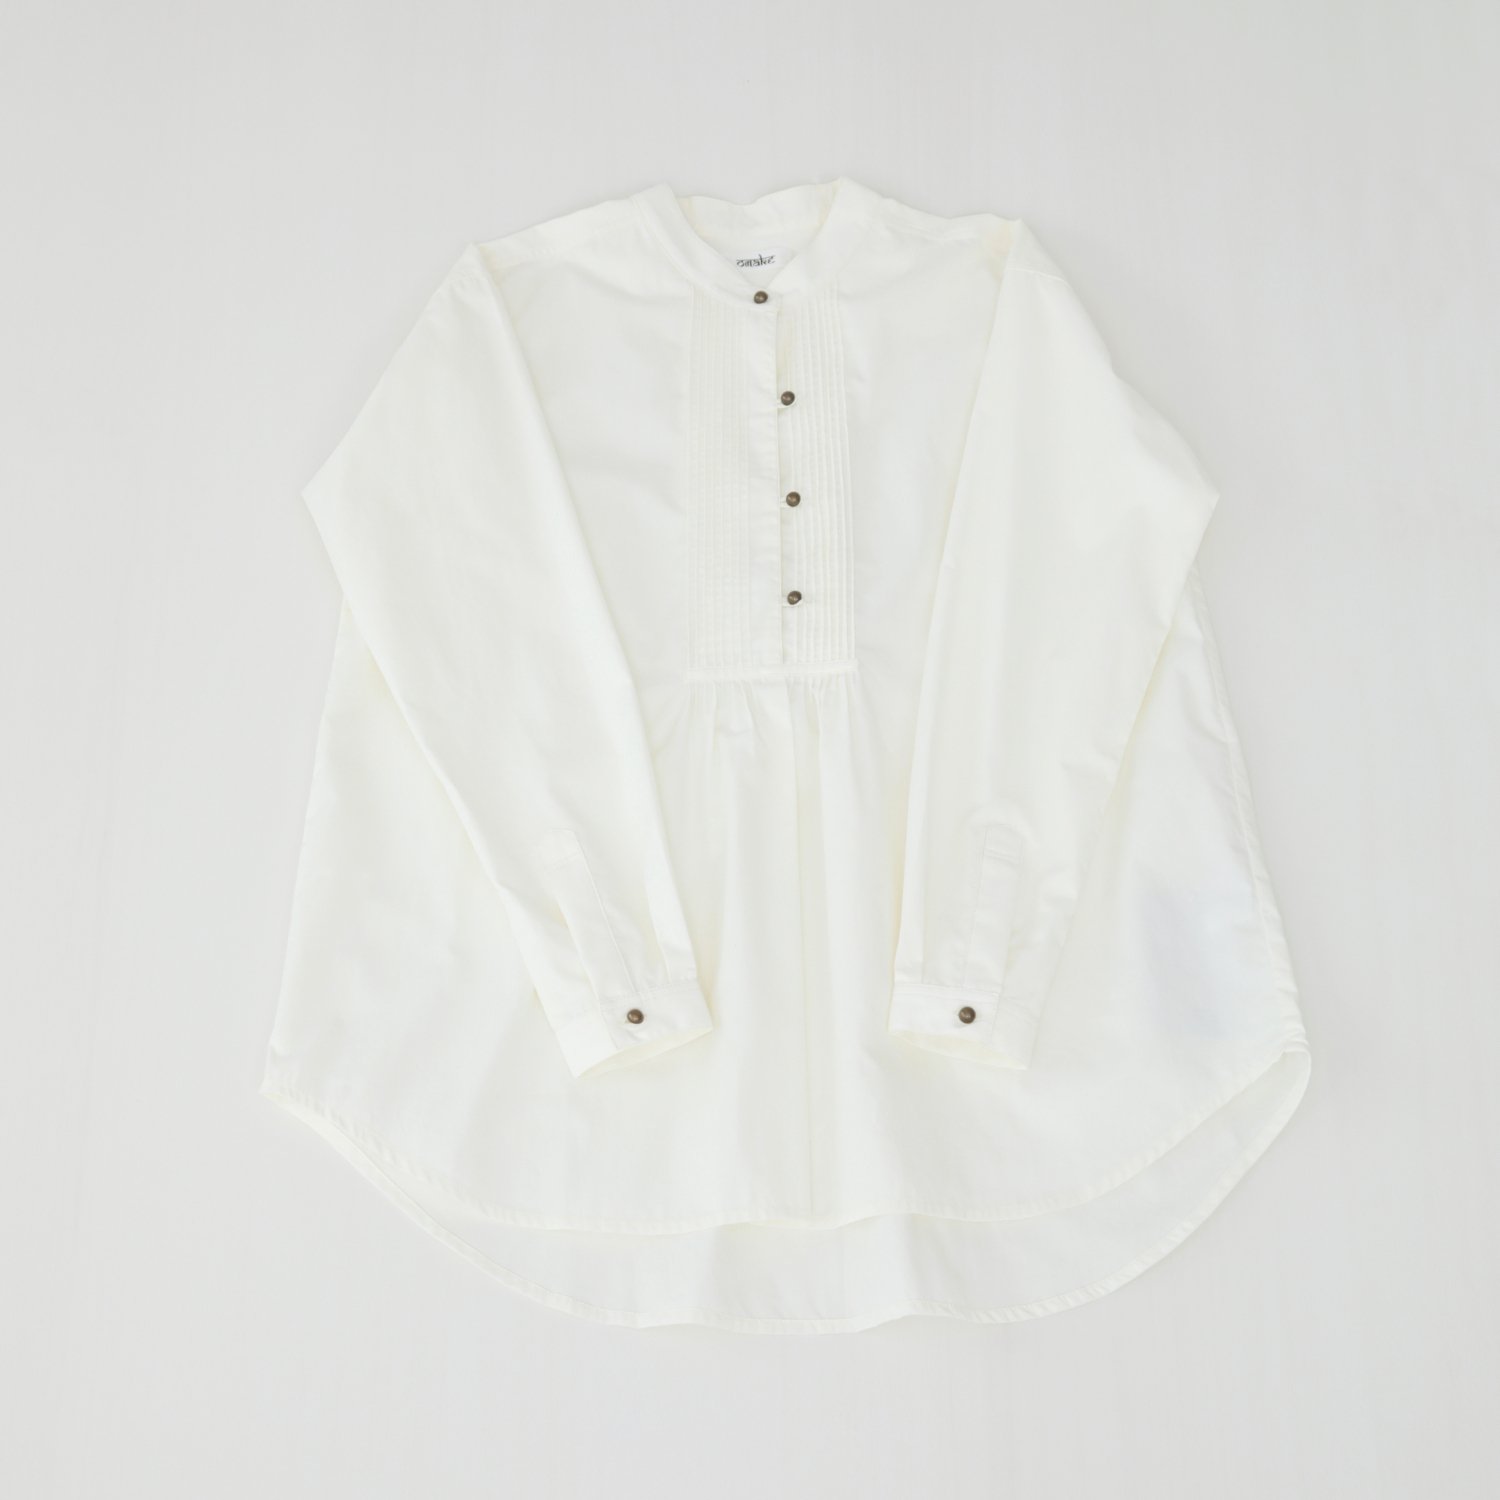 Rinnel shirts / lemon Ivory